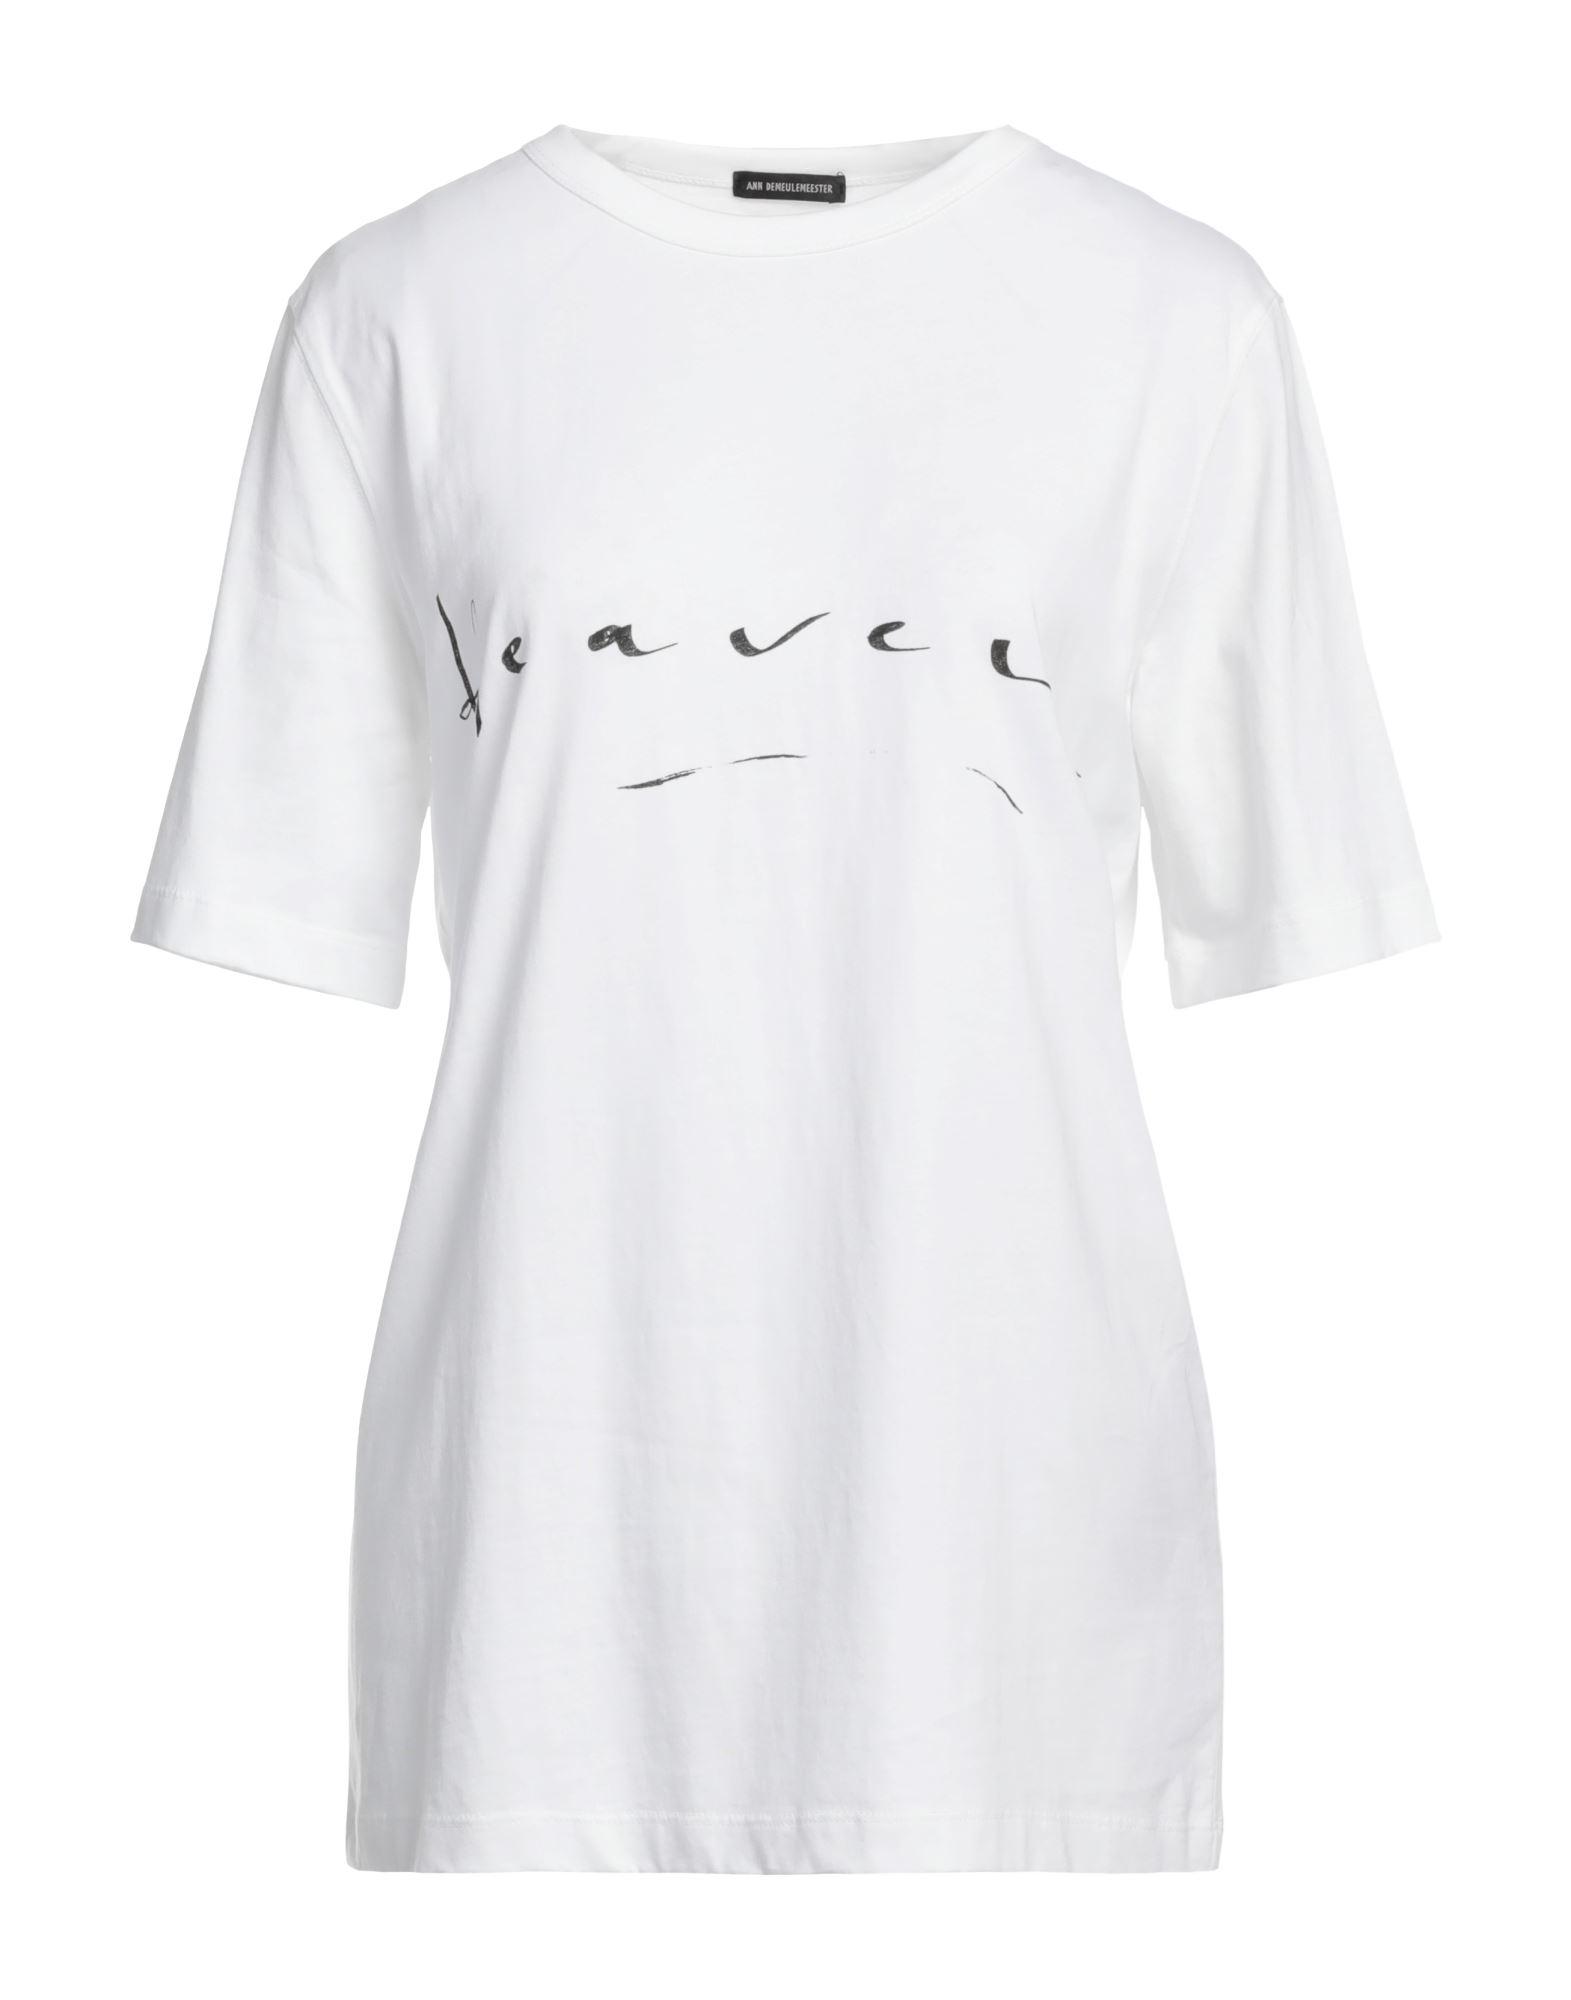 Ann Demeulemeester T-shirt in White | Lyst